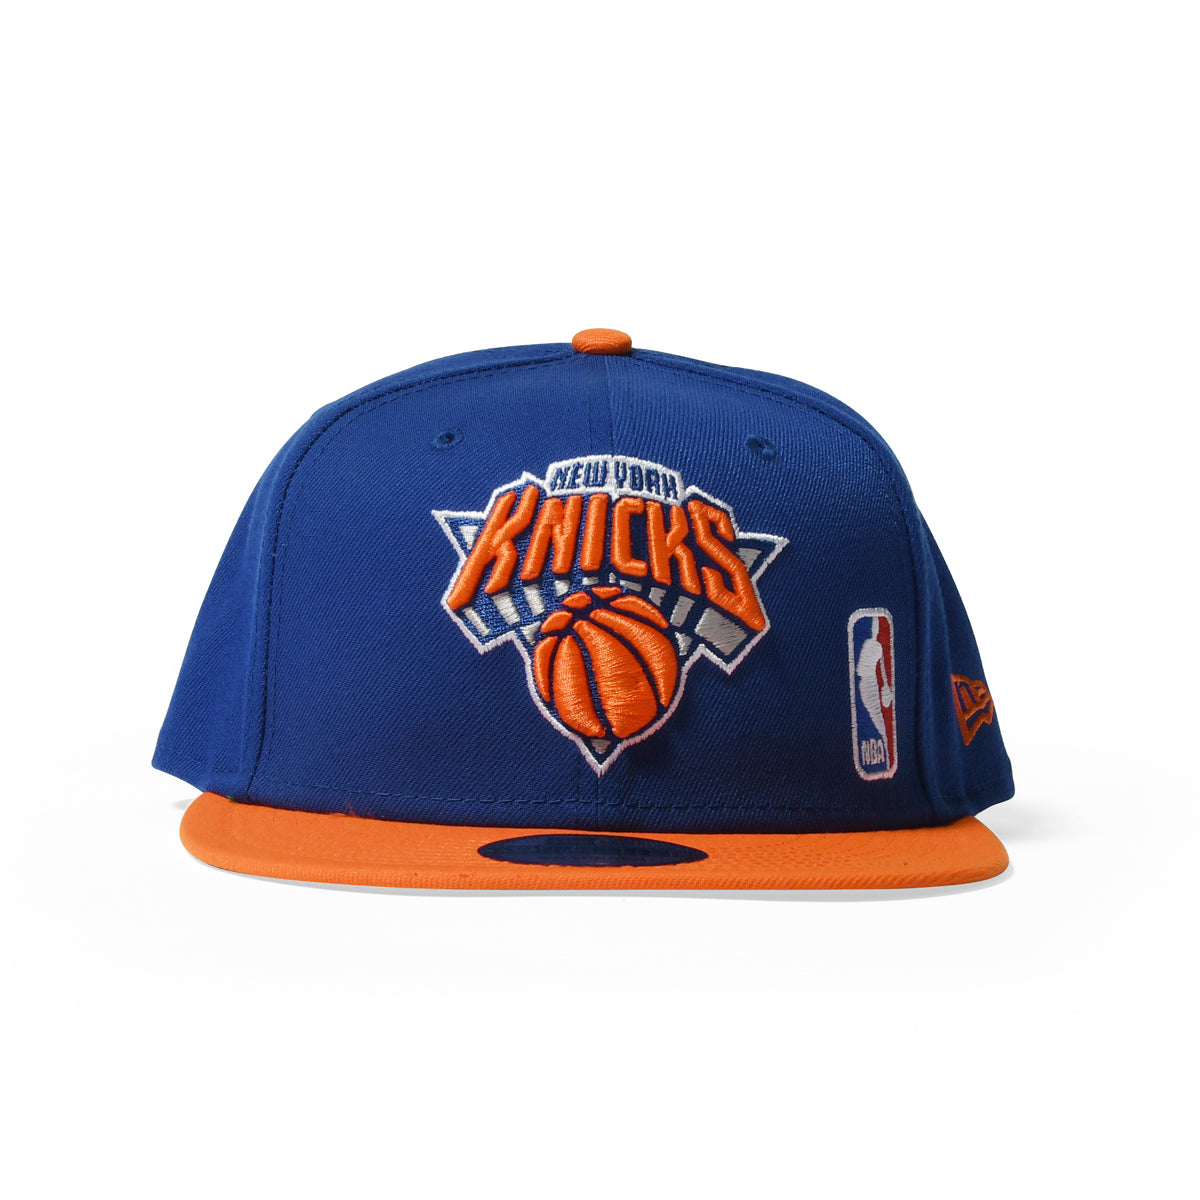 NEW ERA New York Knicks - 9FIFTY ARCH